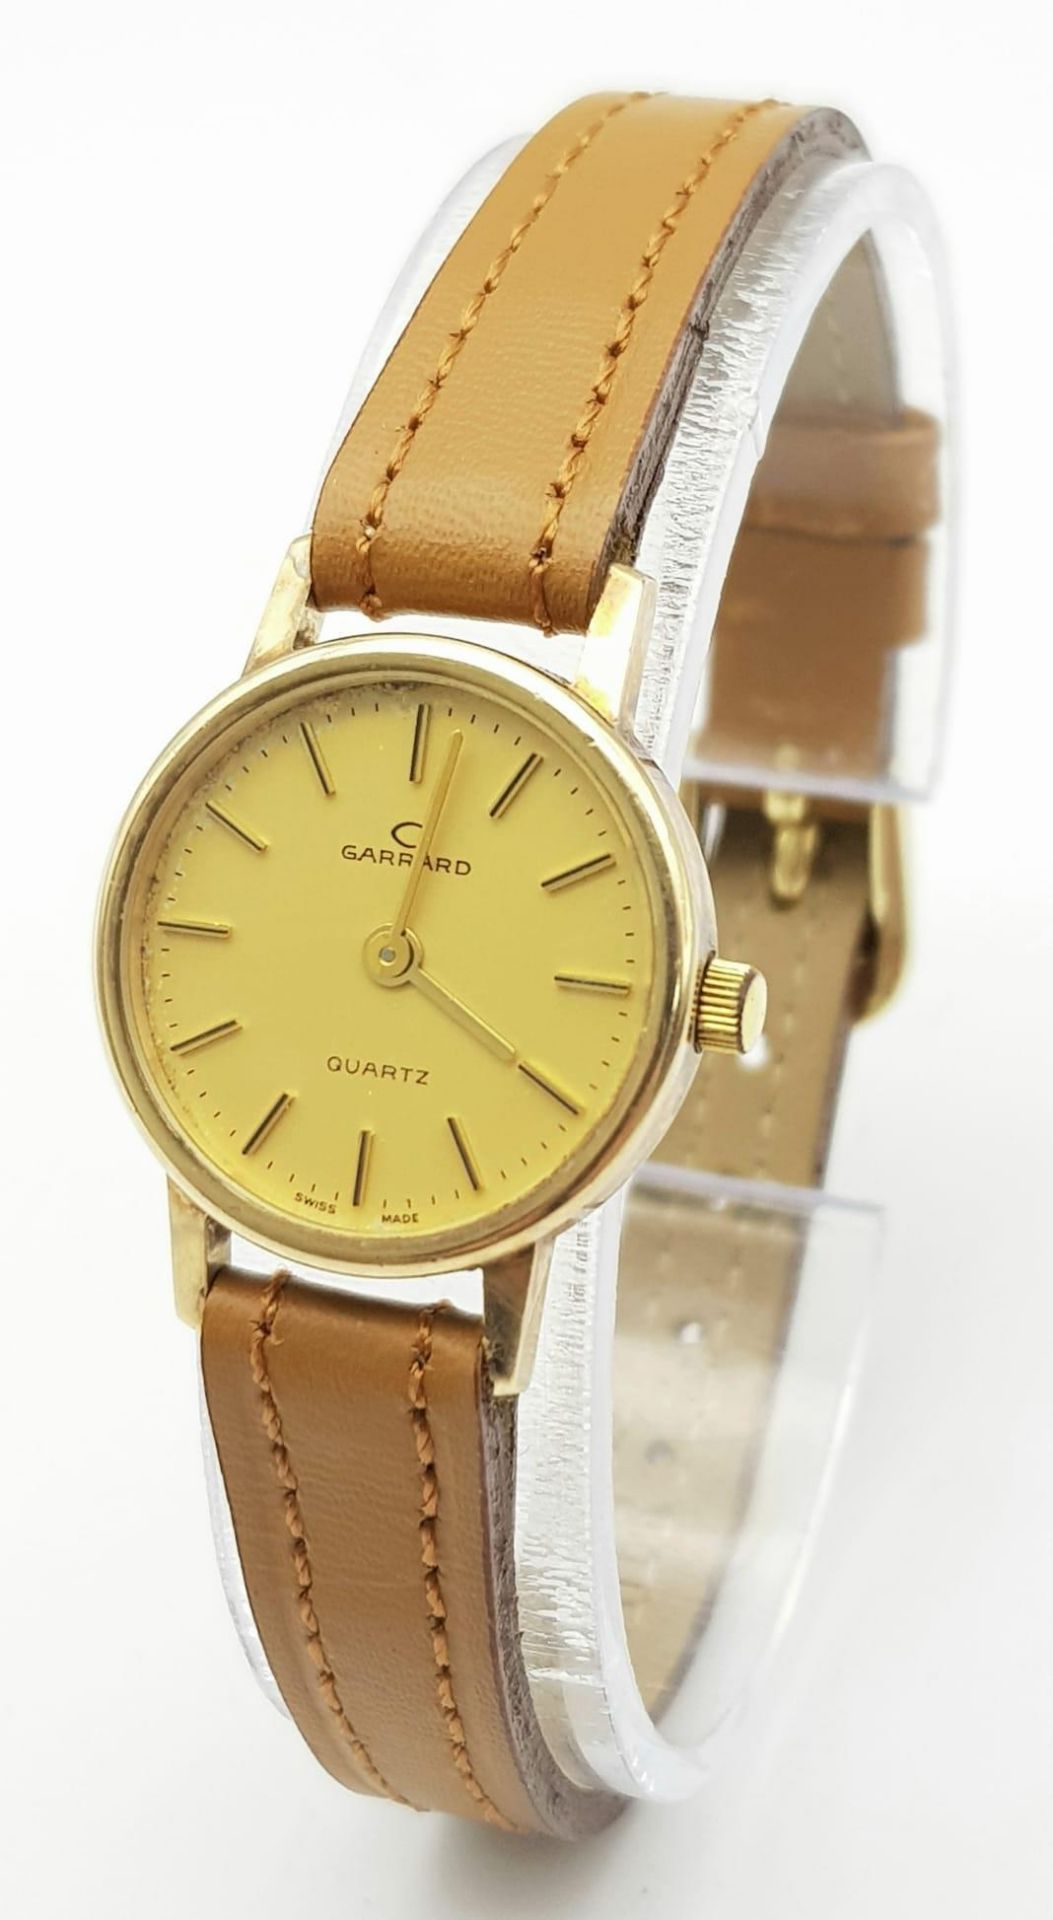 A Garrard 9K Gold Cased Quartz Ladies Watch. New brown leather strap. 9k gold case - 22mm. Gold tone